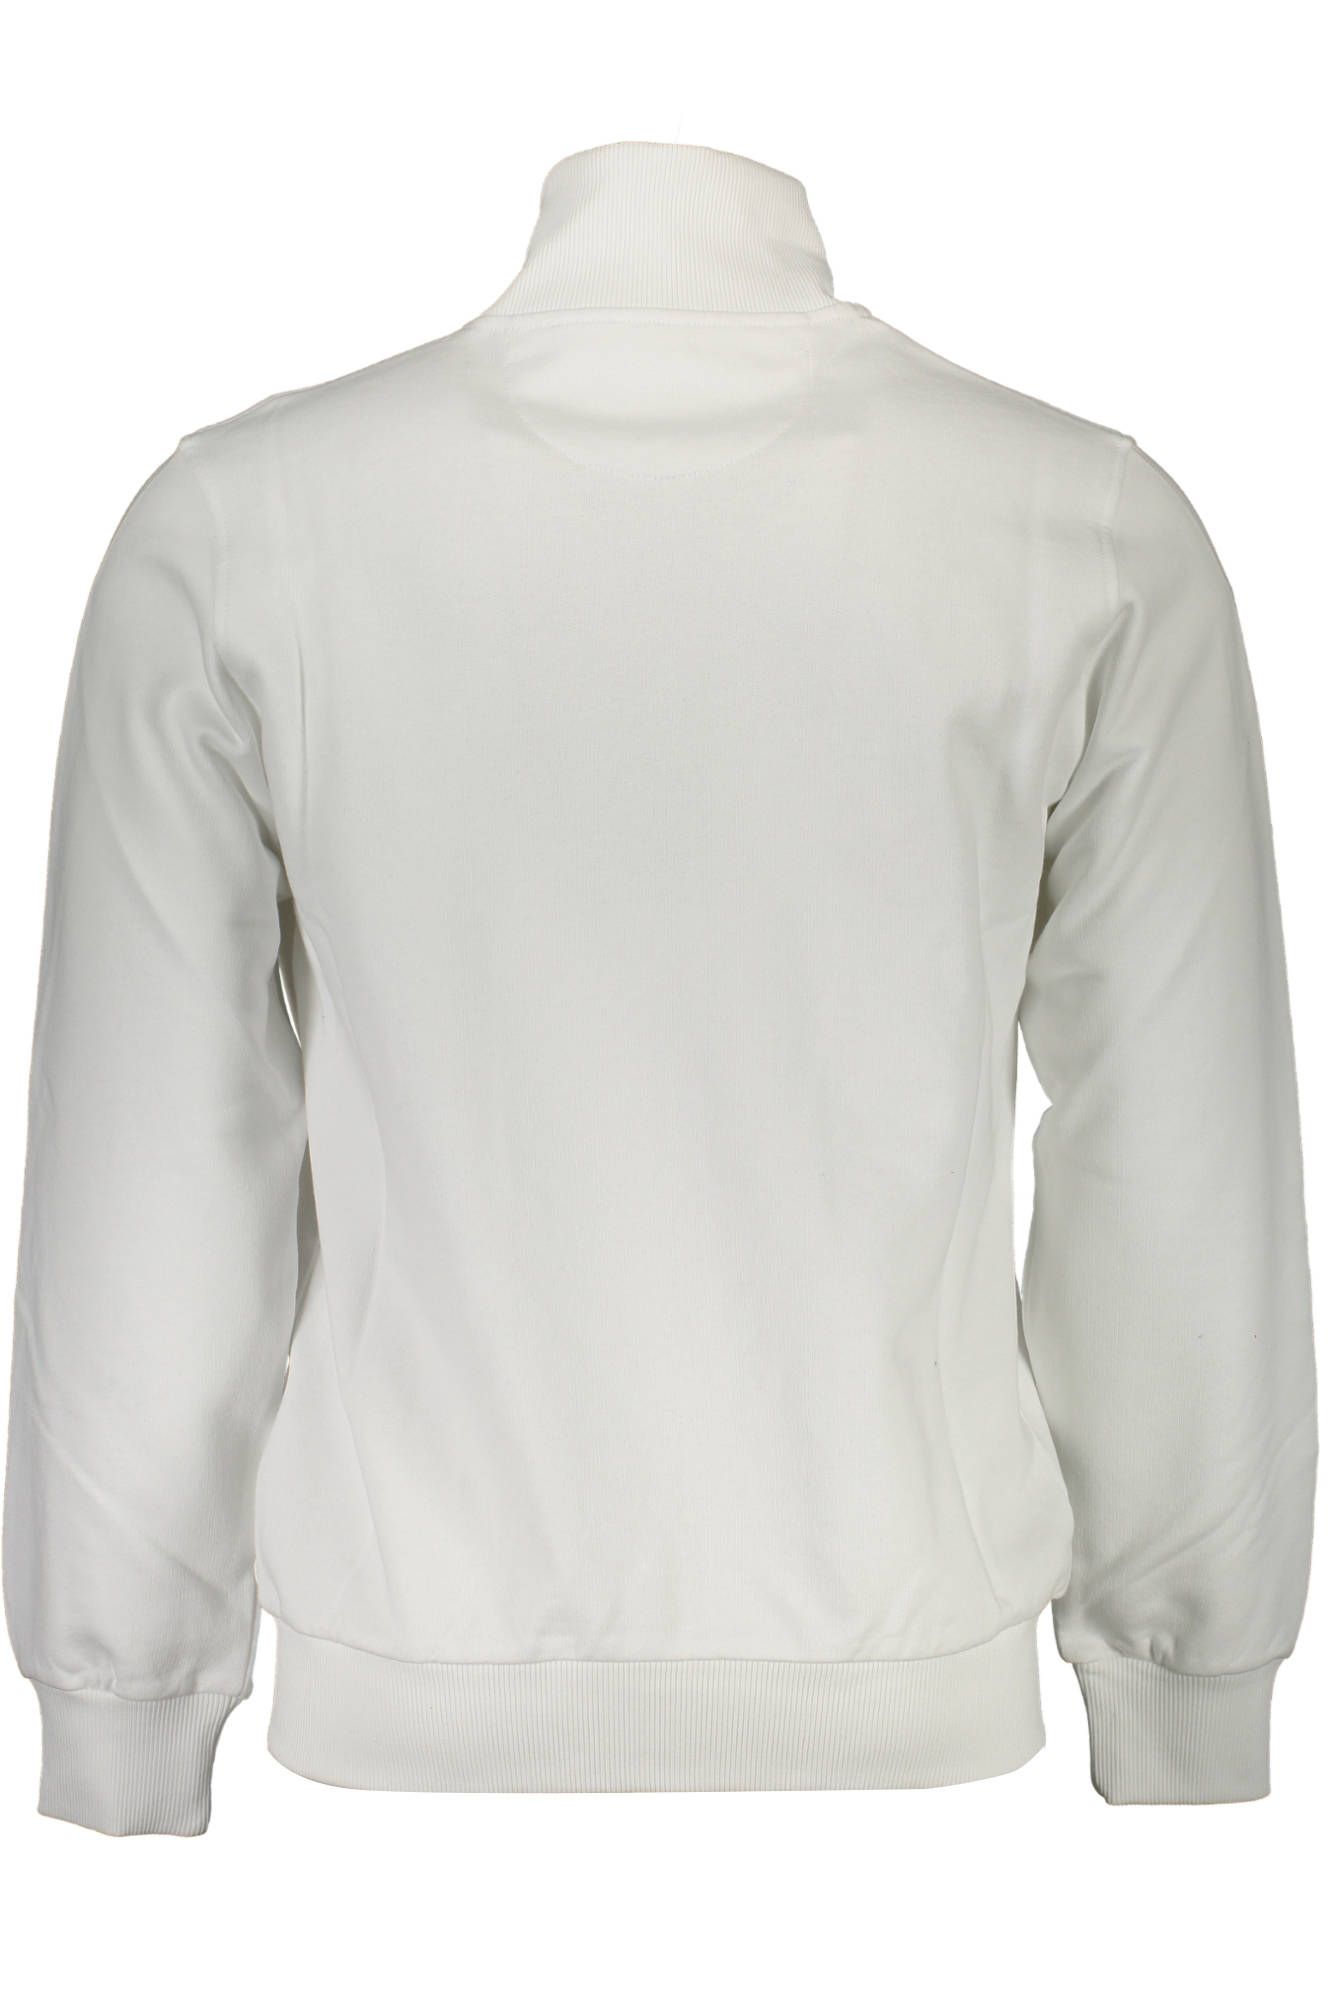 Elegant White Long-Sleeved Zippered Sweatshirt